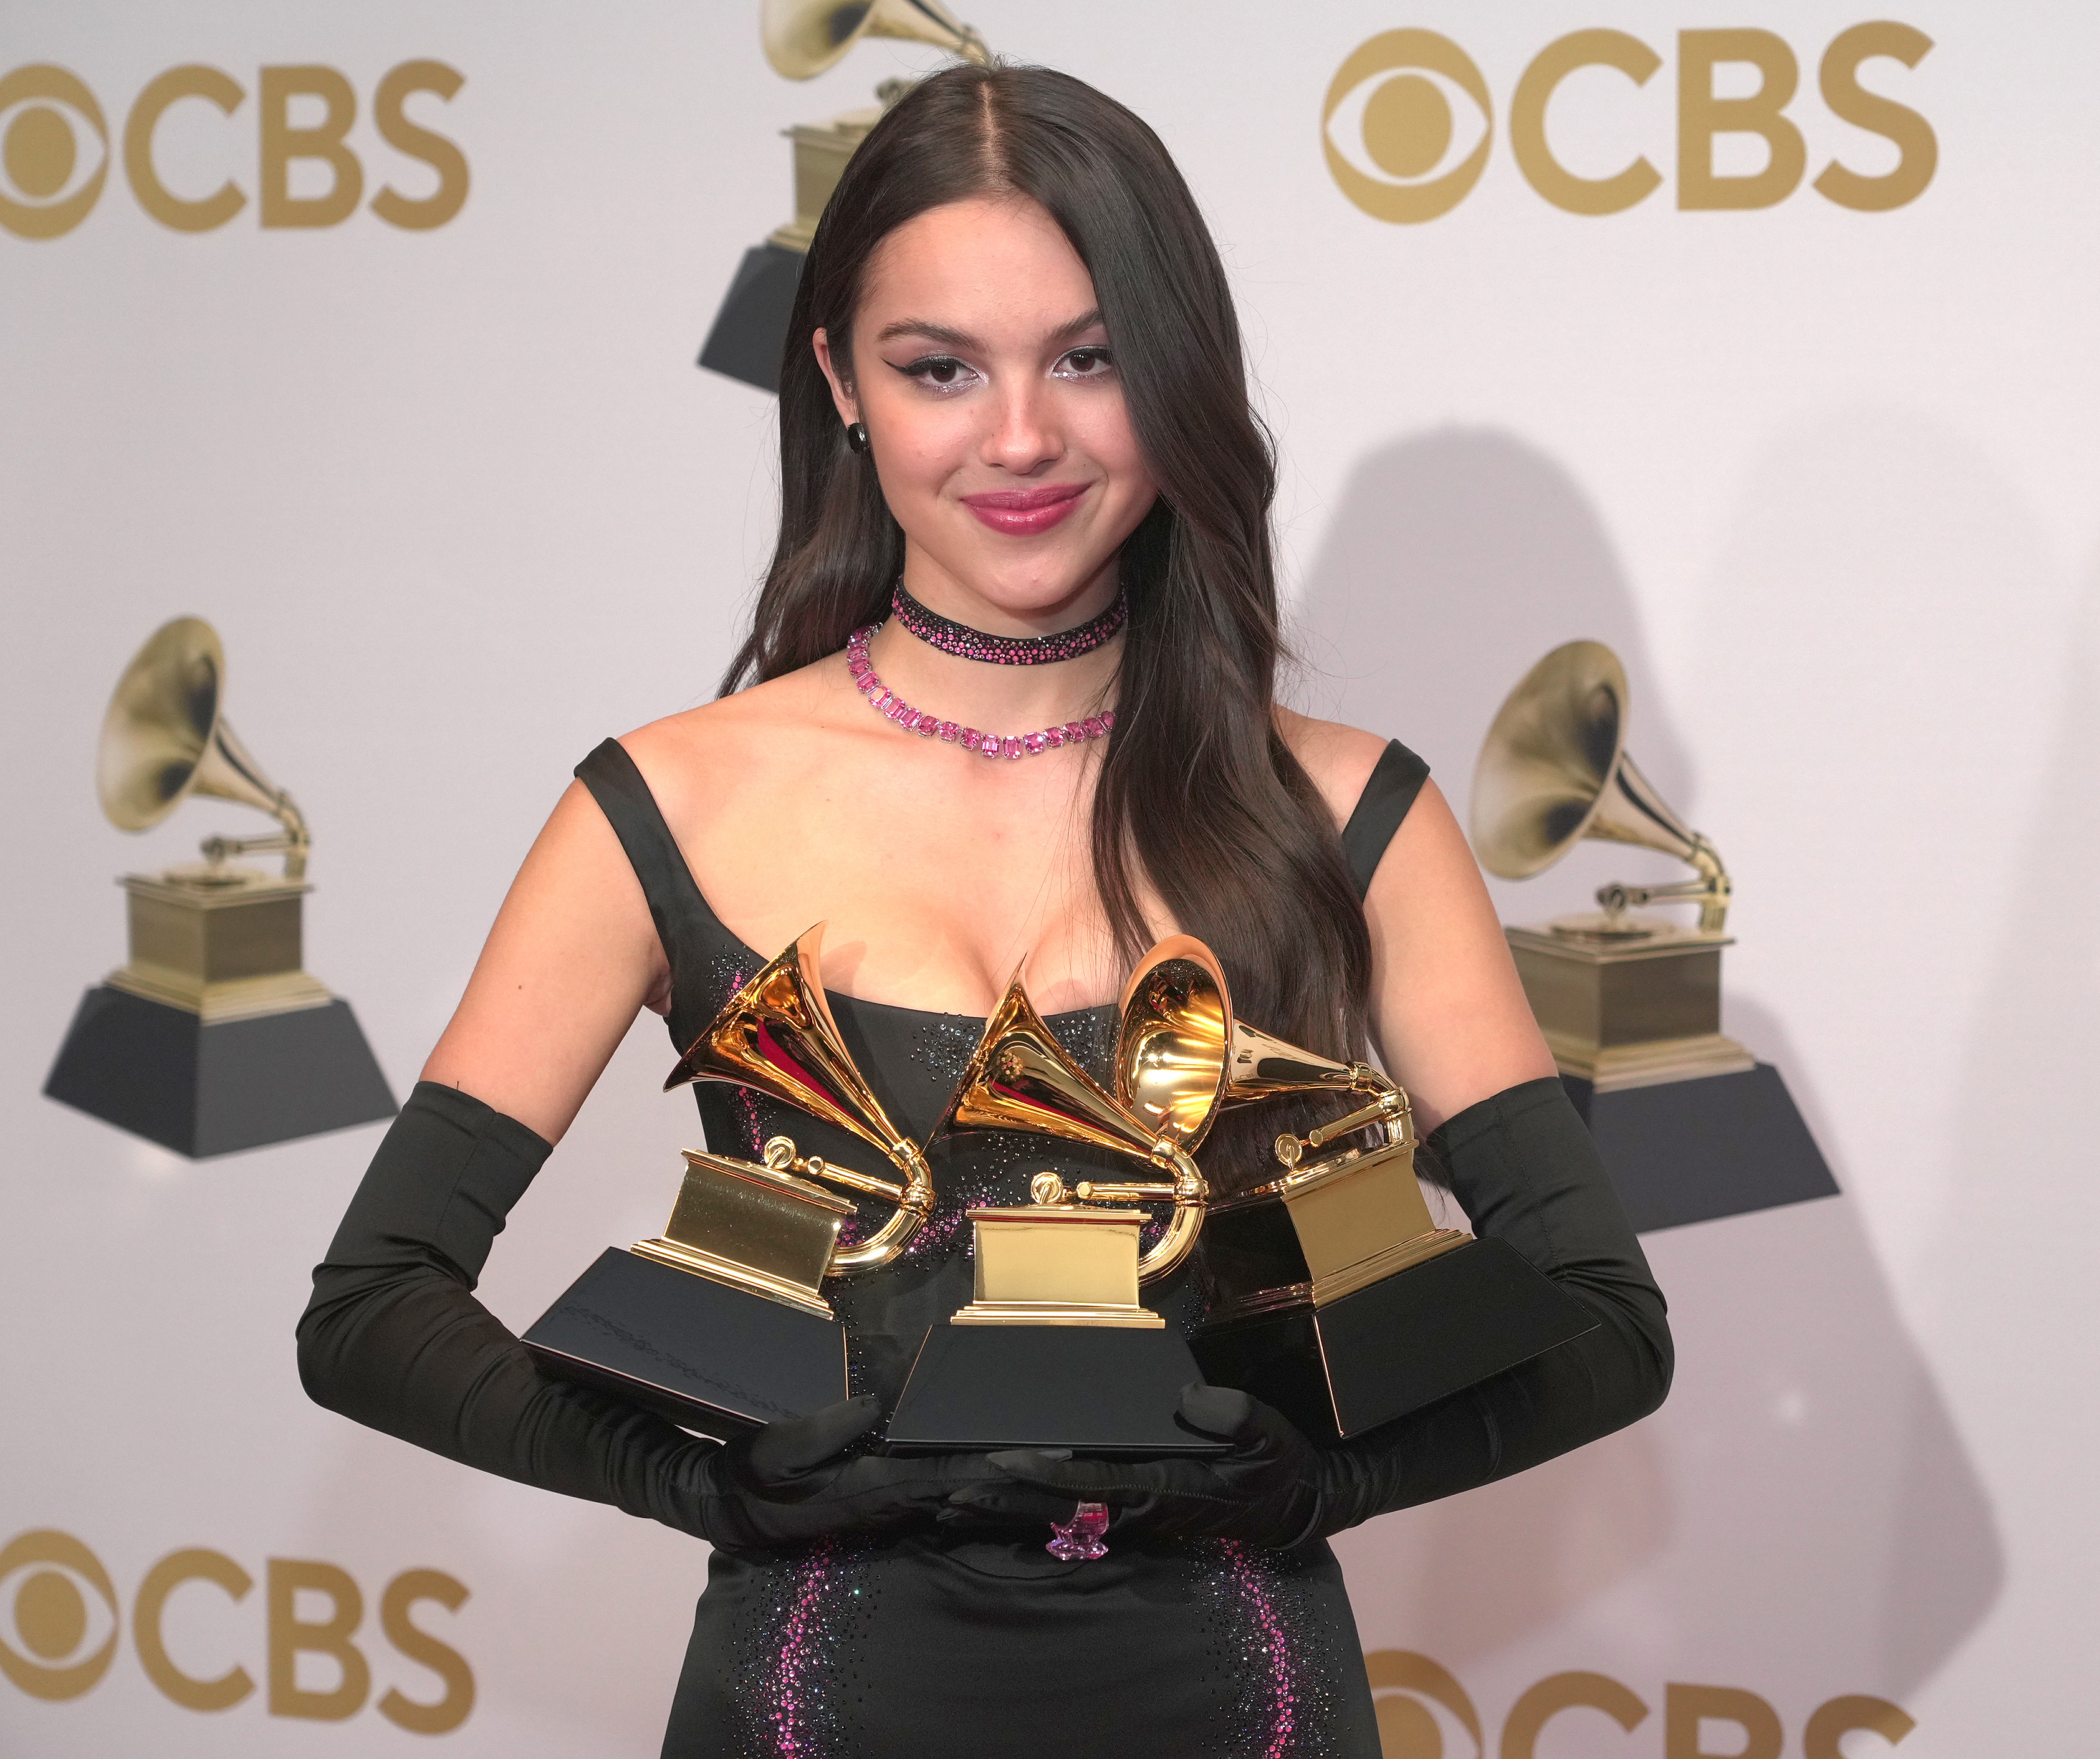 Olivia Rodrigo smiling and holding her three Grammy Awards backstage at the awards show